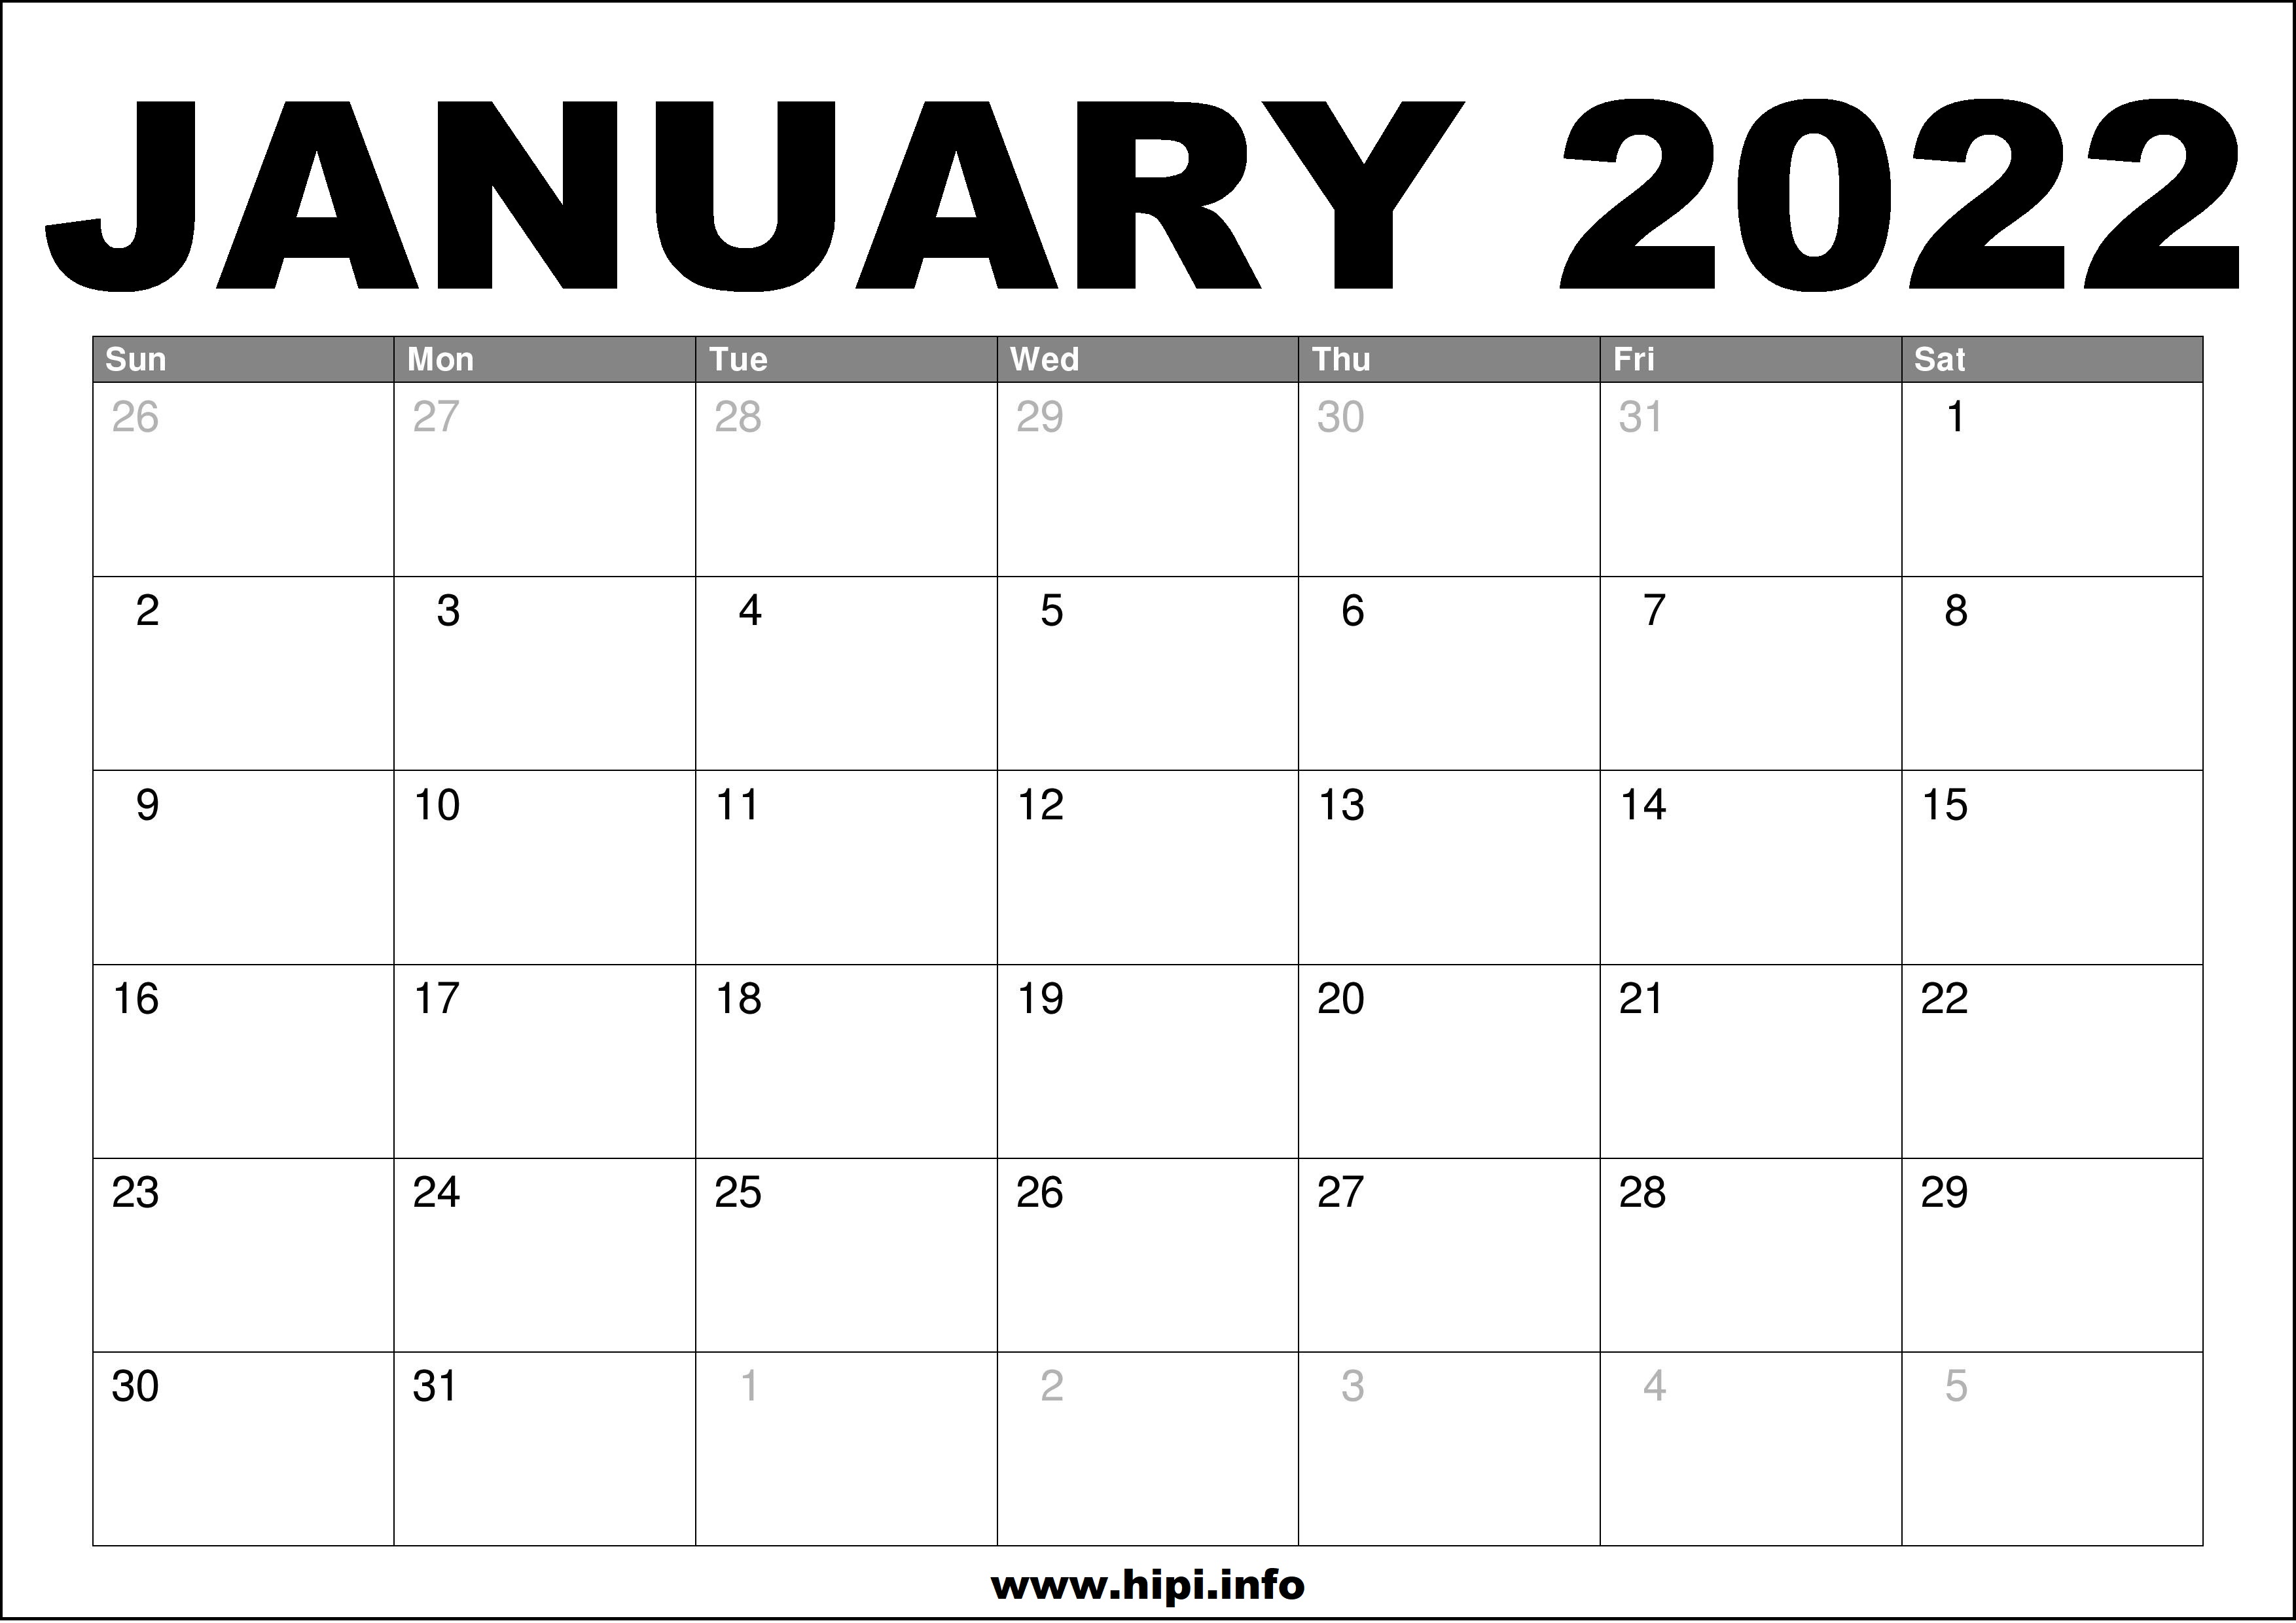 Free January 2022 Calendar Template January 2022 Calendar Printable Free - Hipi.info | Calendars Printable Free